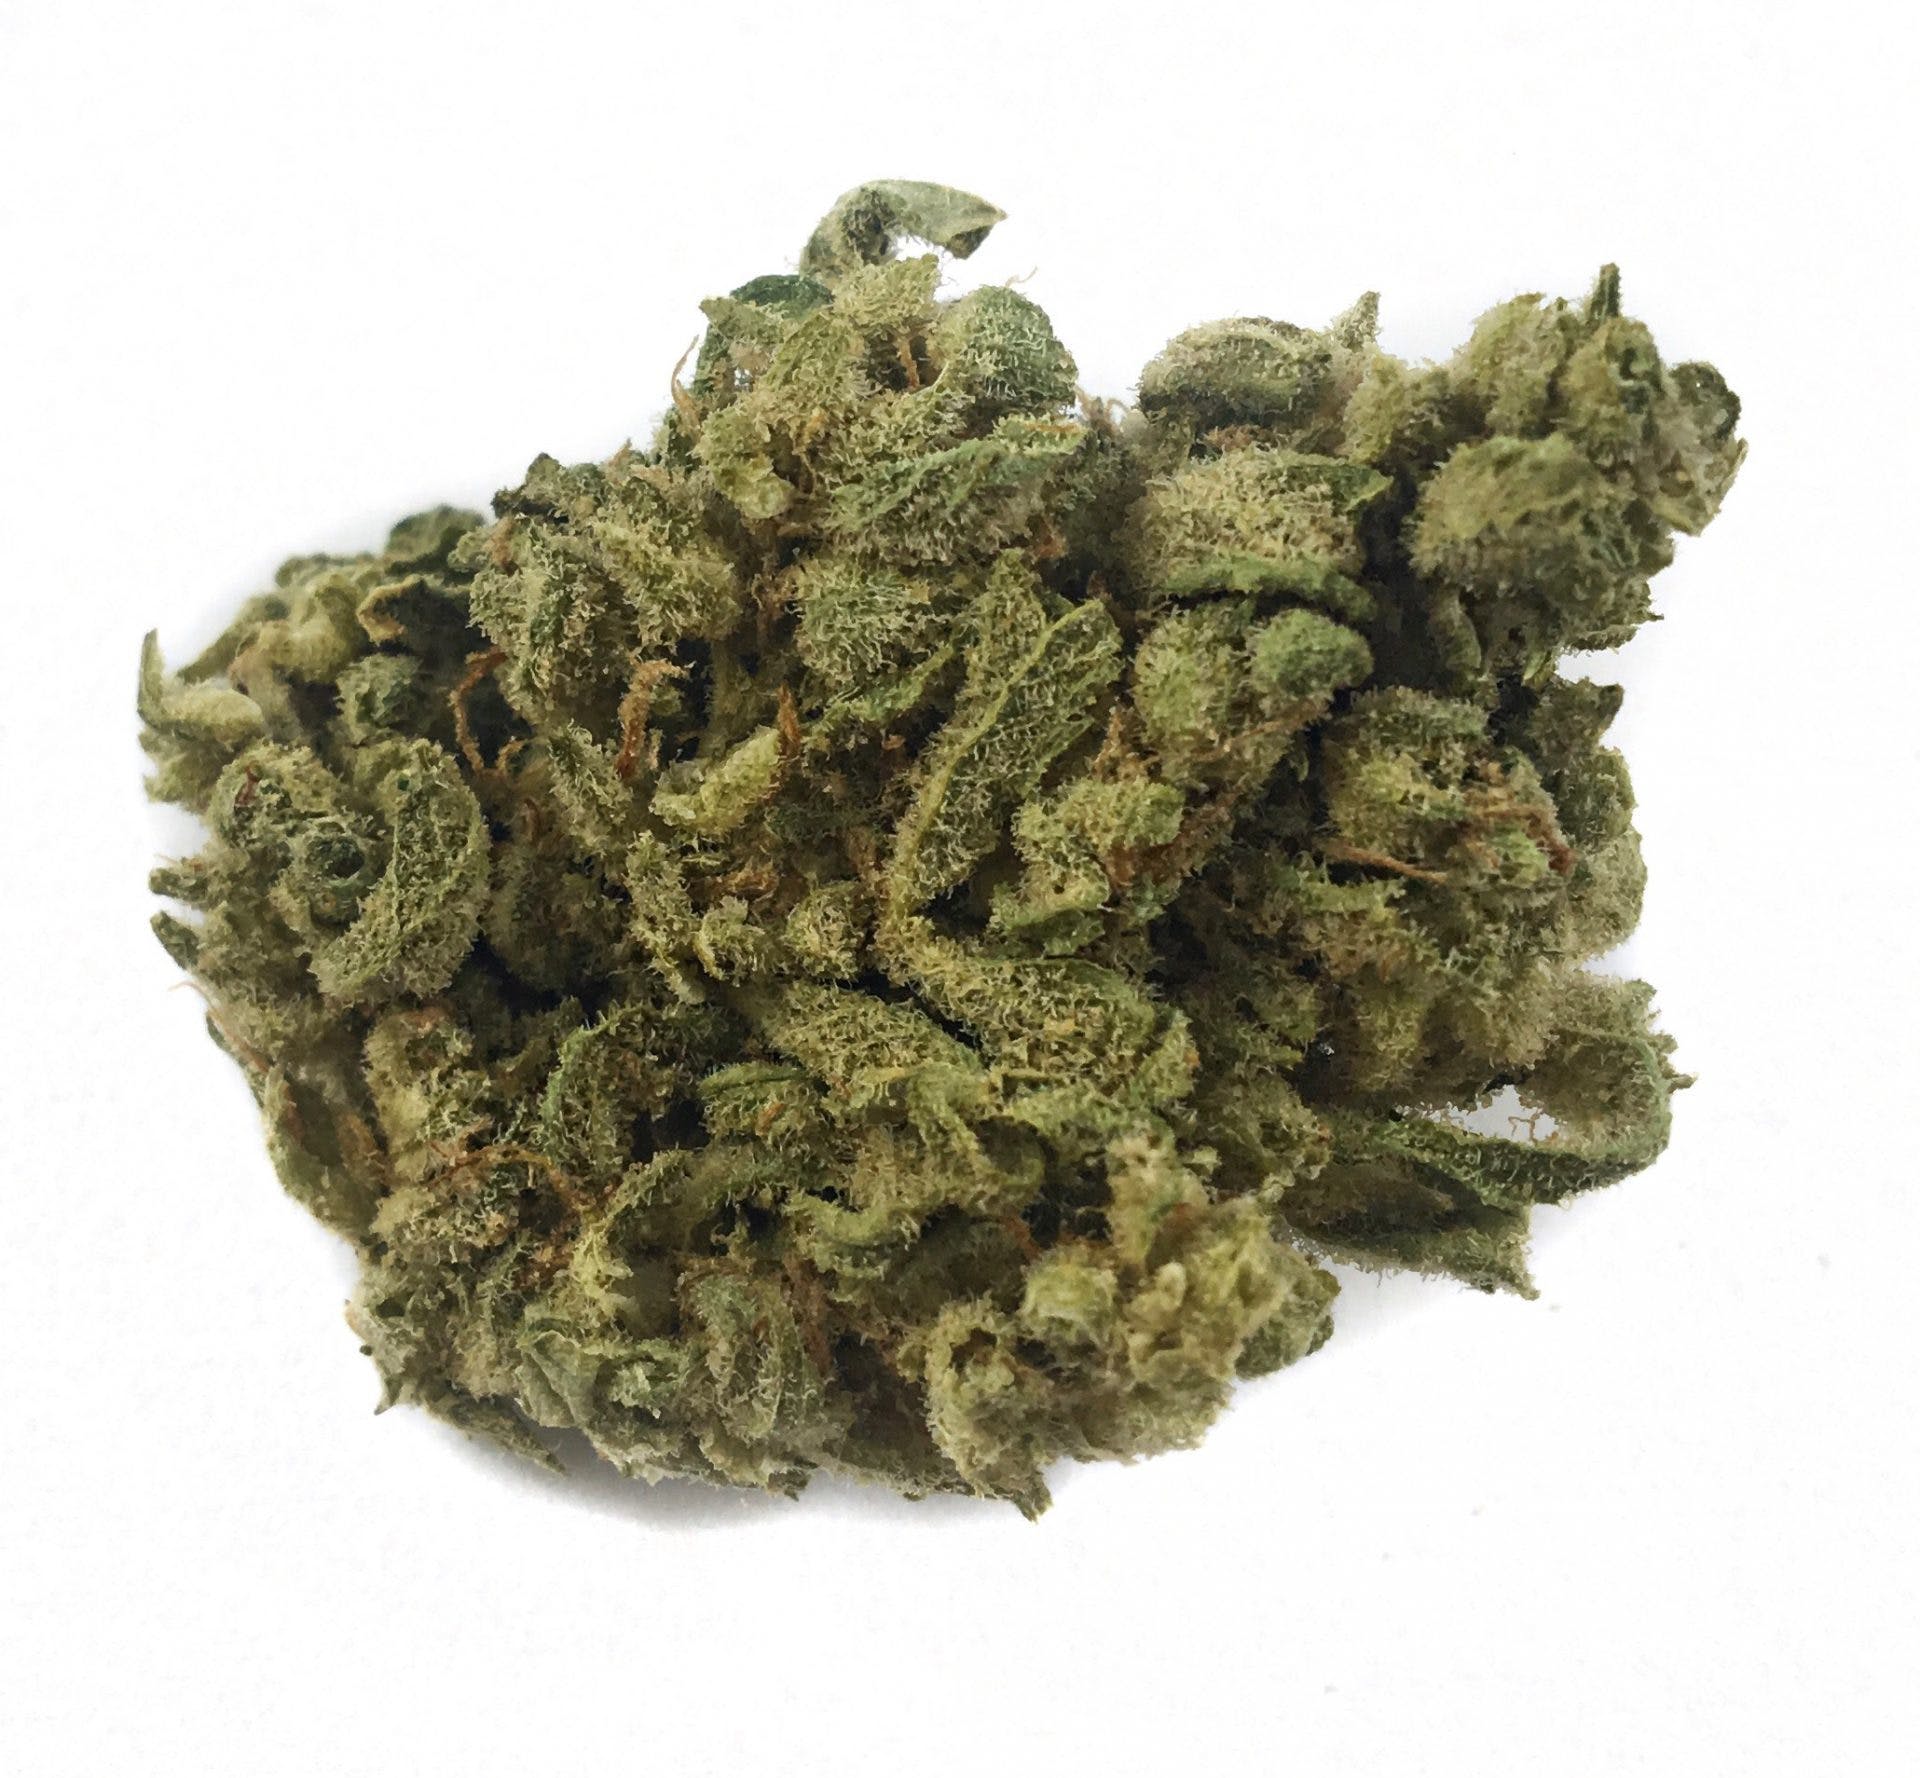 marijuana-dispensaries-strictly-20-cap-in-bakersfield-vip-blue-dream-2oz270-qp530